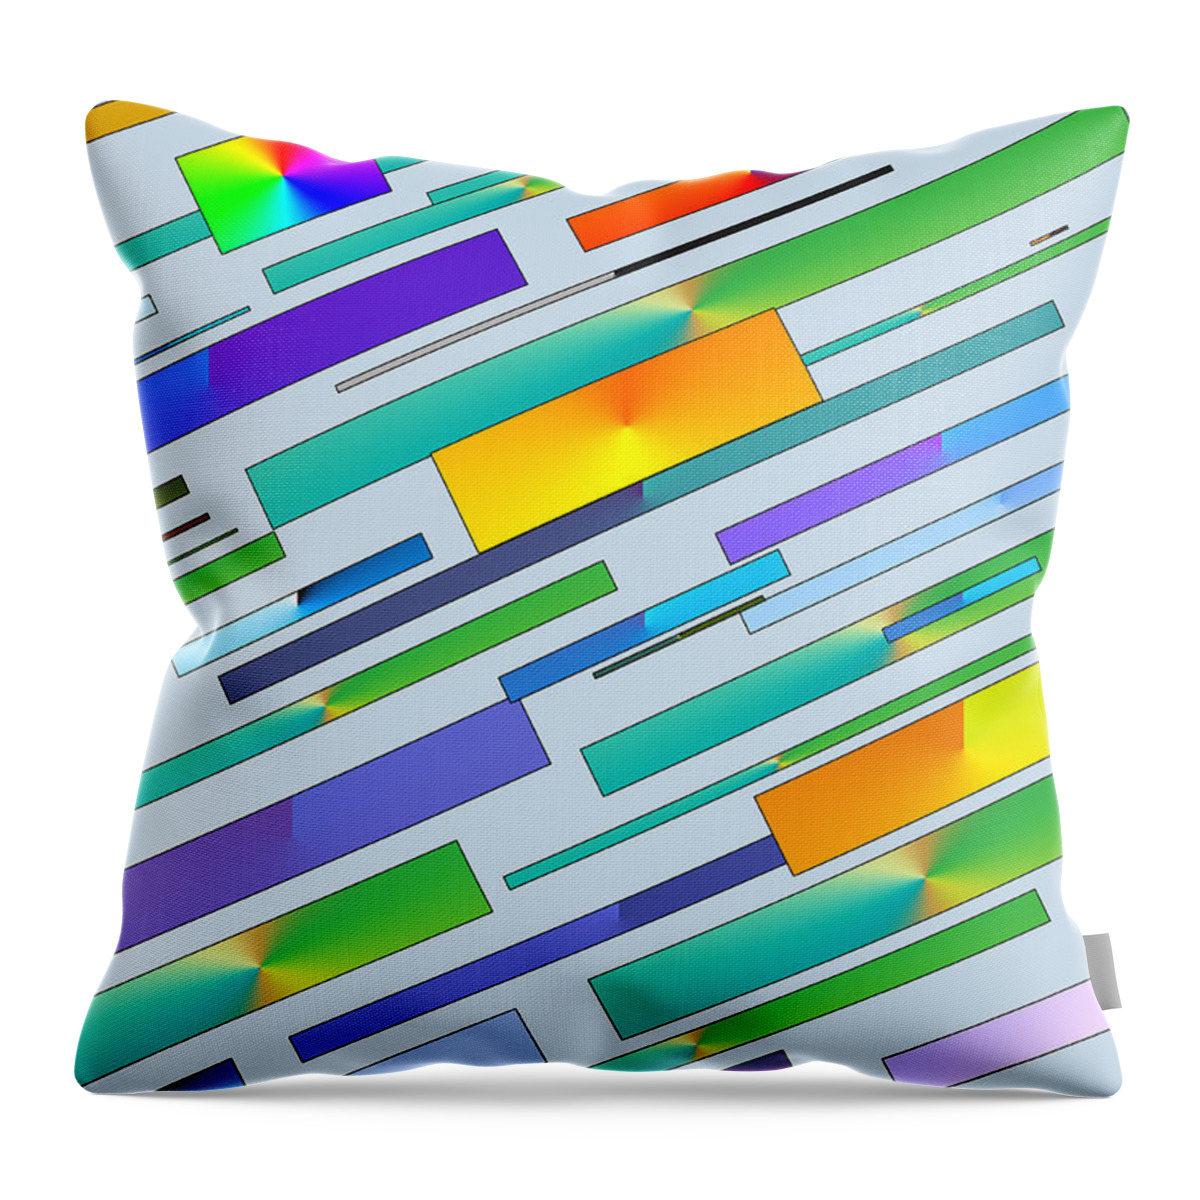 Digital Image Throw Pillow featuring the digital art Gradienta by George Pennington